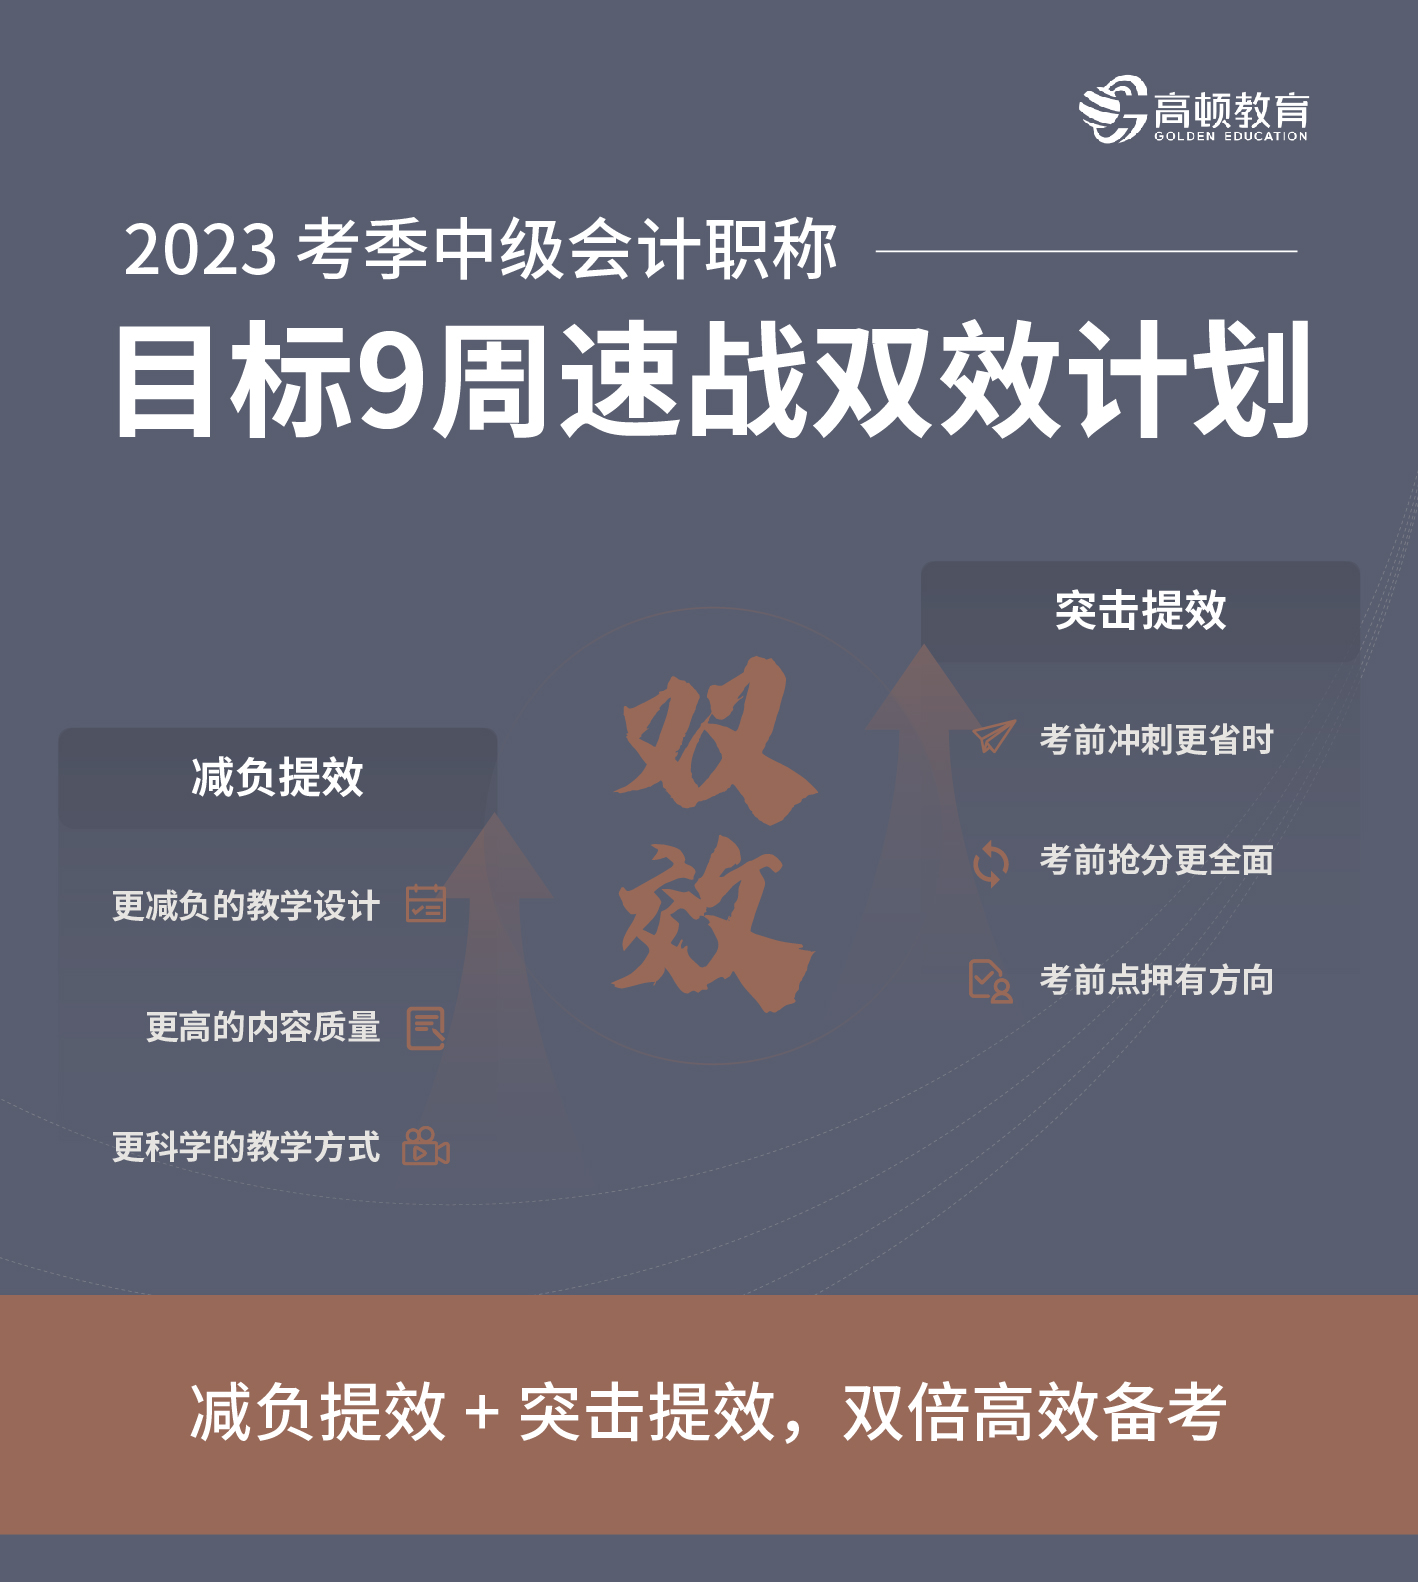 https://simg01.gaodunwangxiao.com/uploadfiles/product-center/202211/03/3b15a_20221103154442.jpg